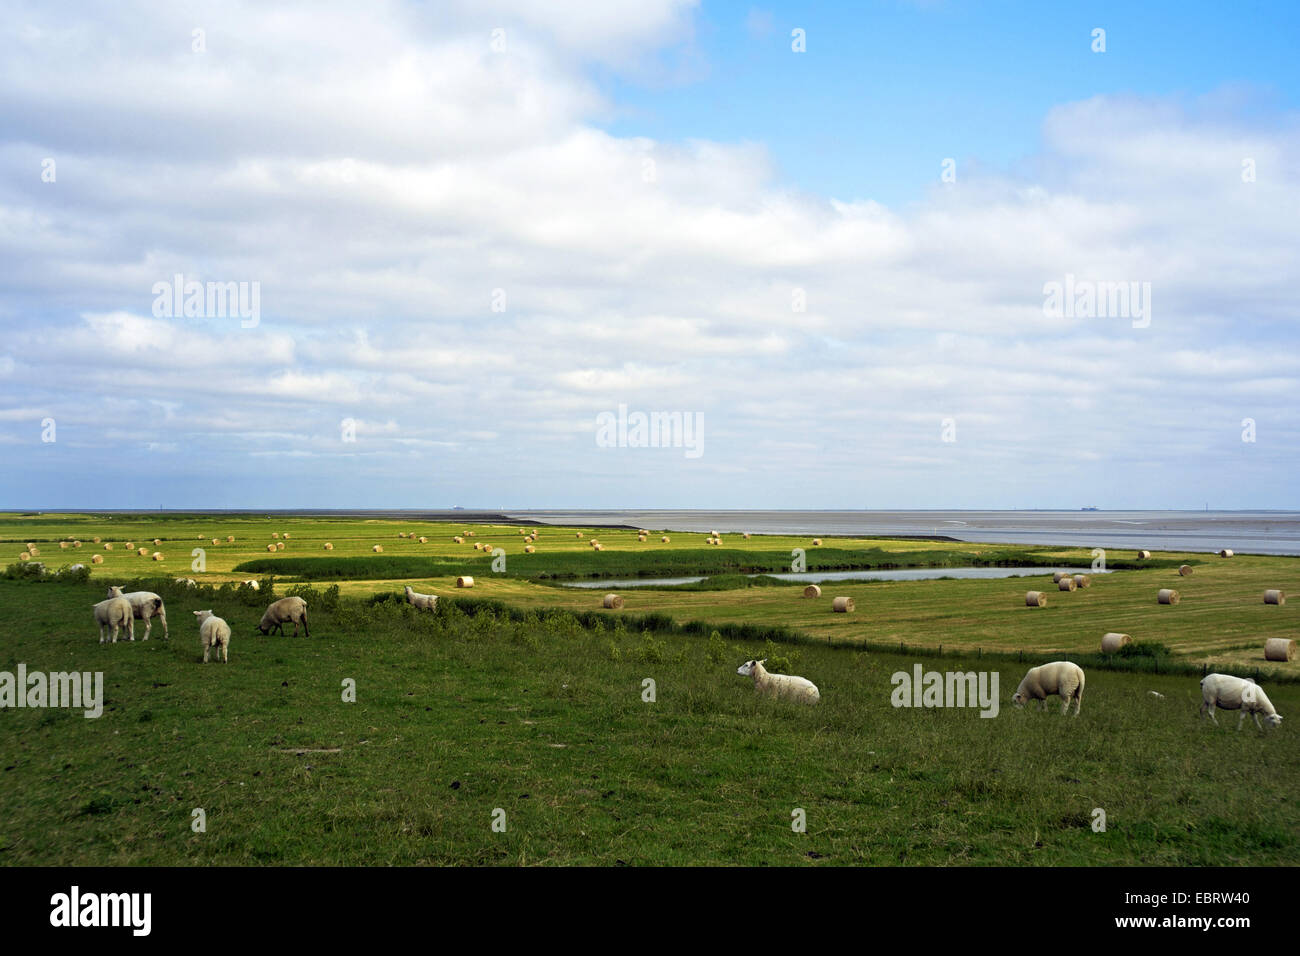 embankment foreland with sheeps, bales of straw  and kolk, Germany, Lower Saxony, Wesermarsch, Butjadingen Stock Photo